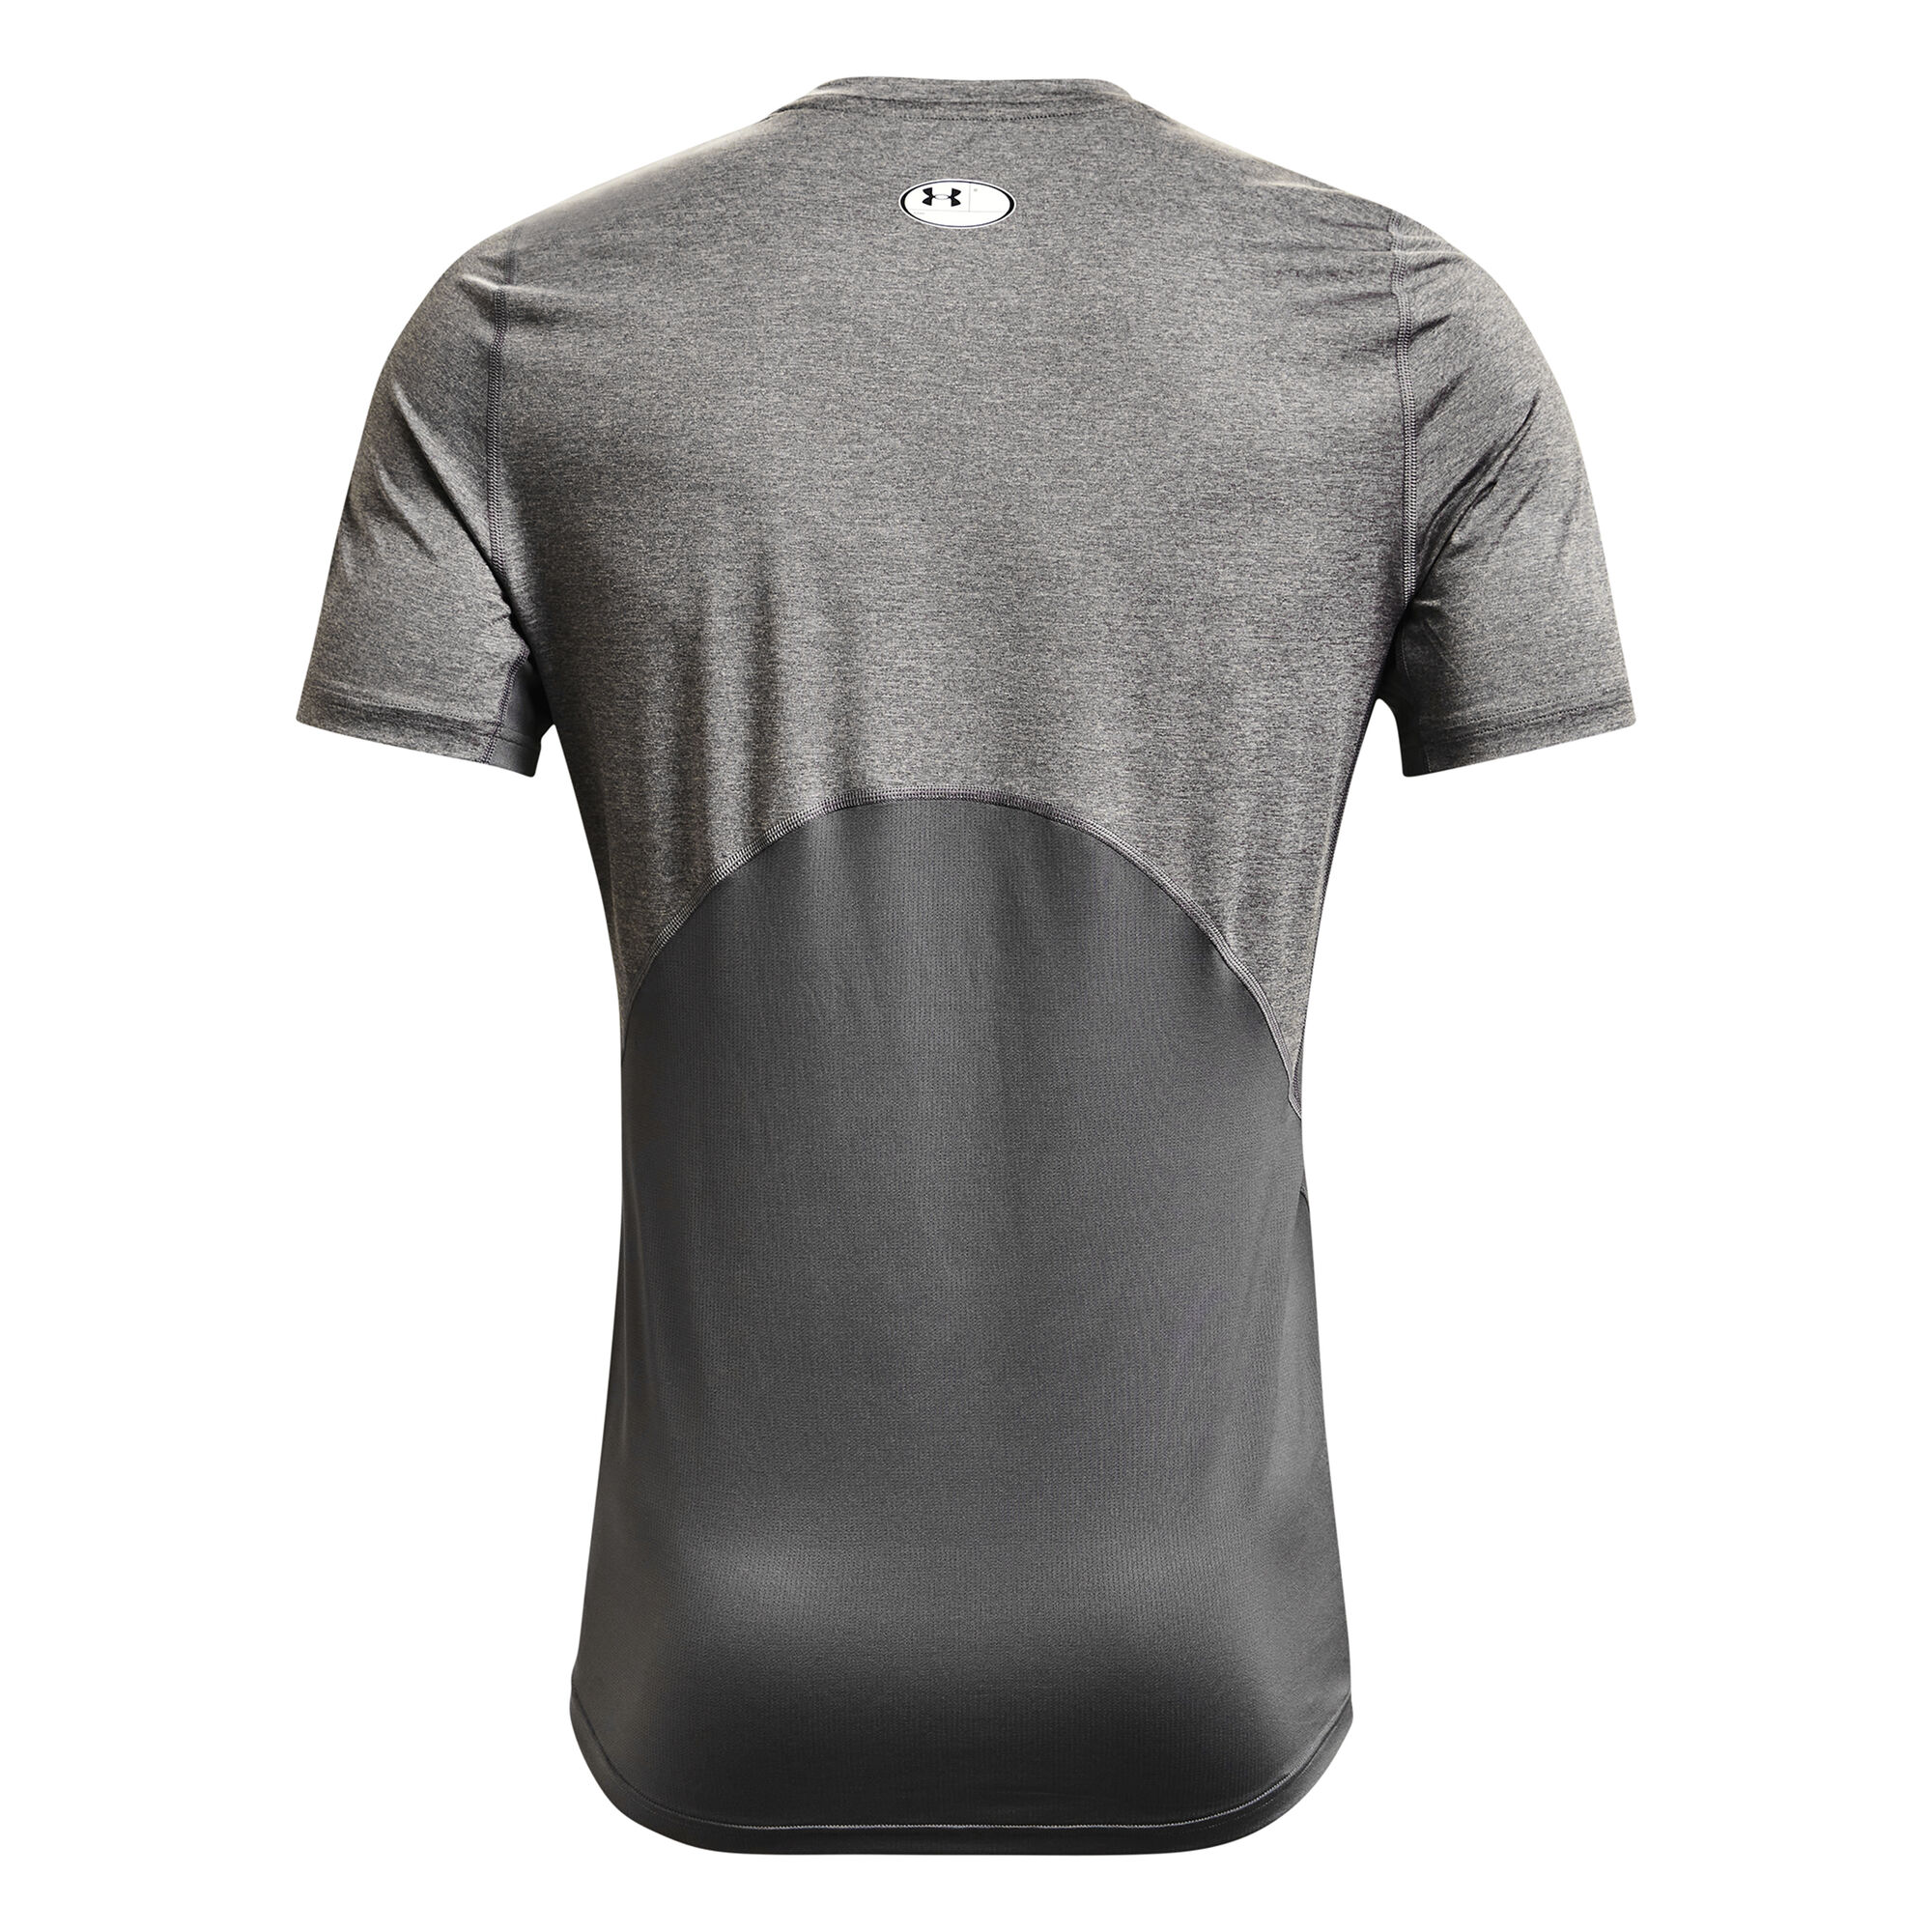 Under Armour Print T-shirt - pitch grey/grey 